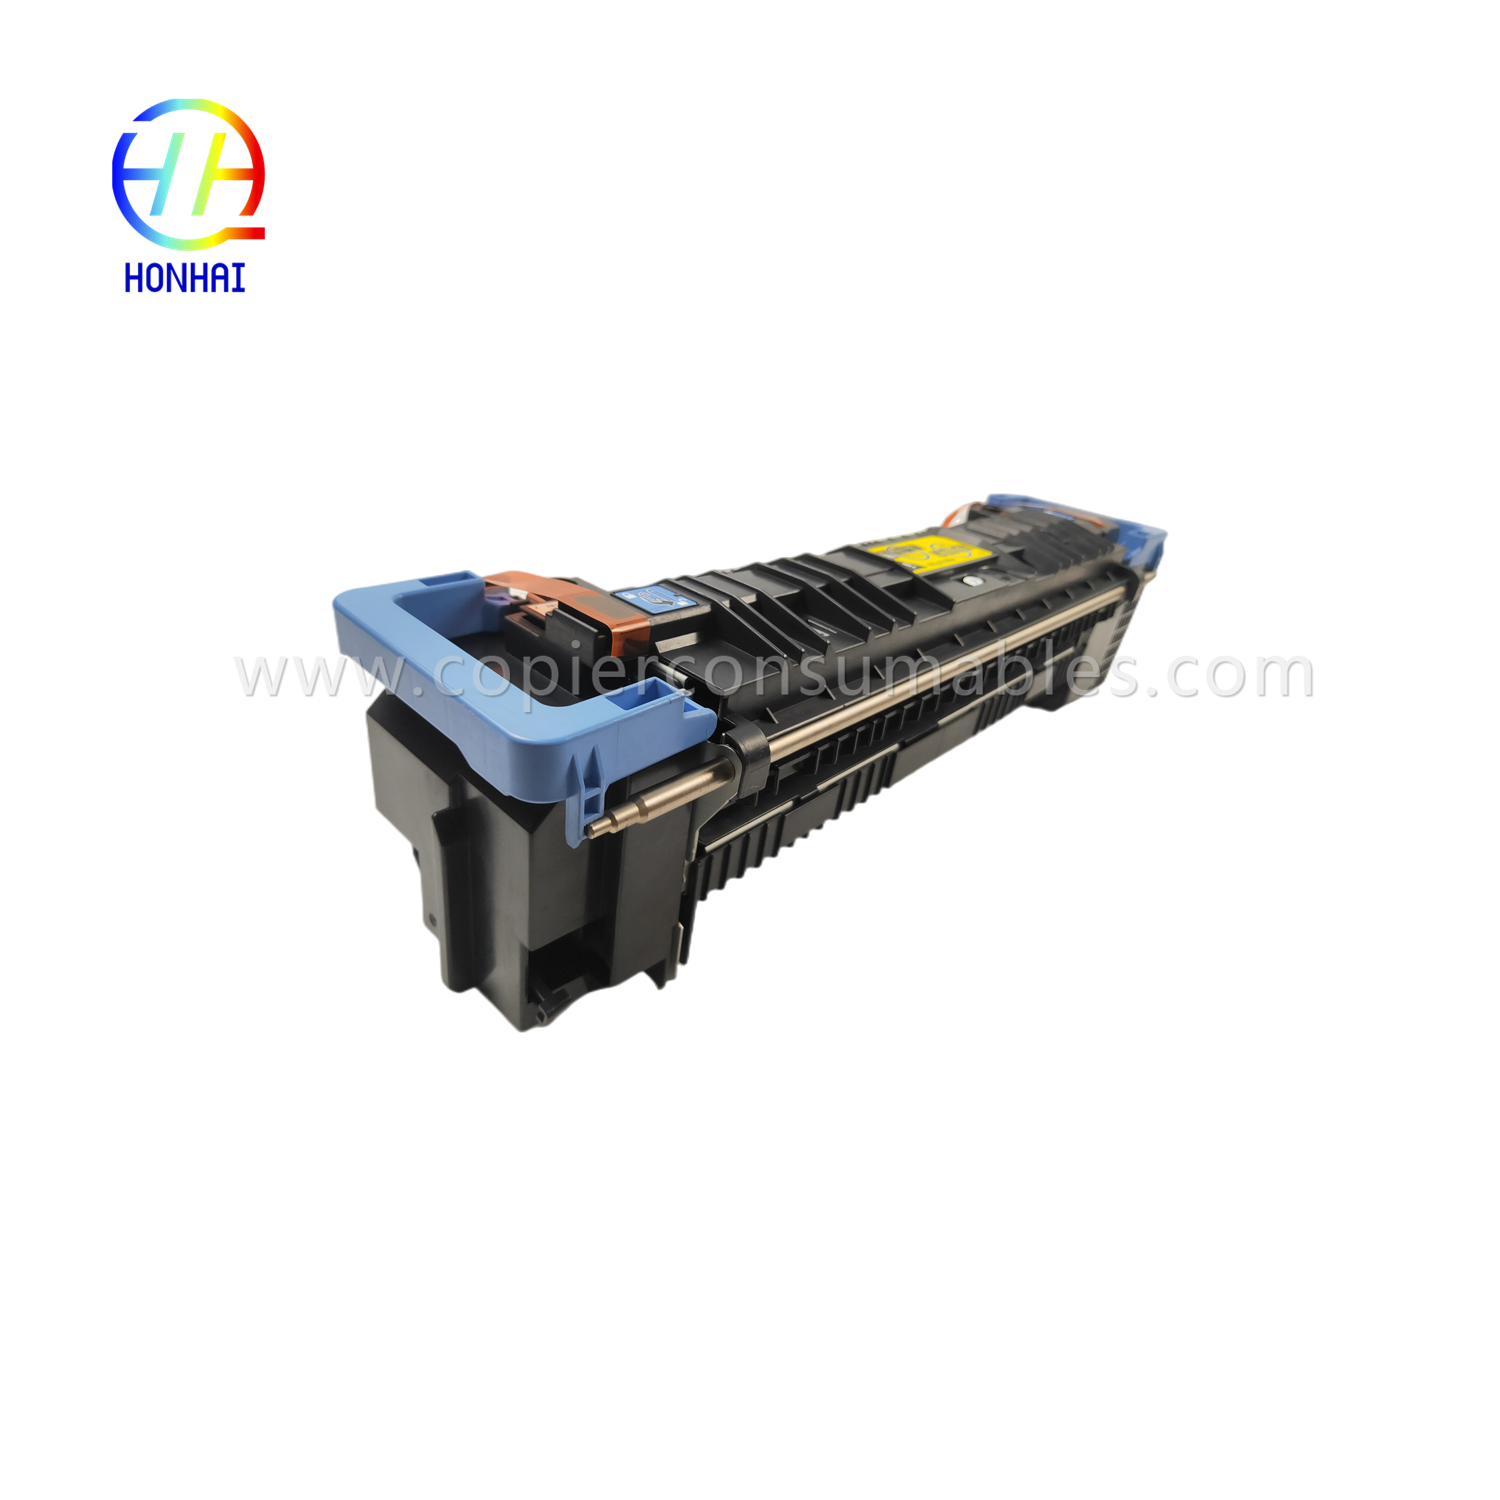 https://c585.goodao.net/fuser-assembly-unit-for-hp-m855-m880-m855dn-m855xh-m880z-m880z-c1n54-67901-c1n58-67901-product/fusing-assheating-fix